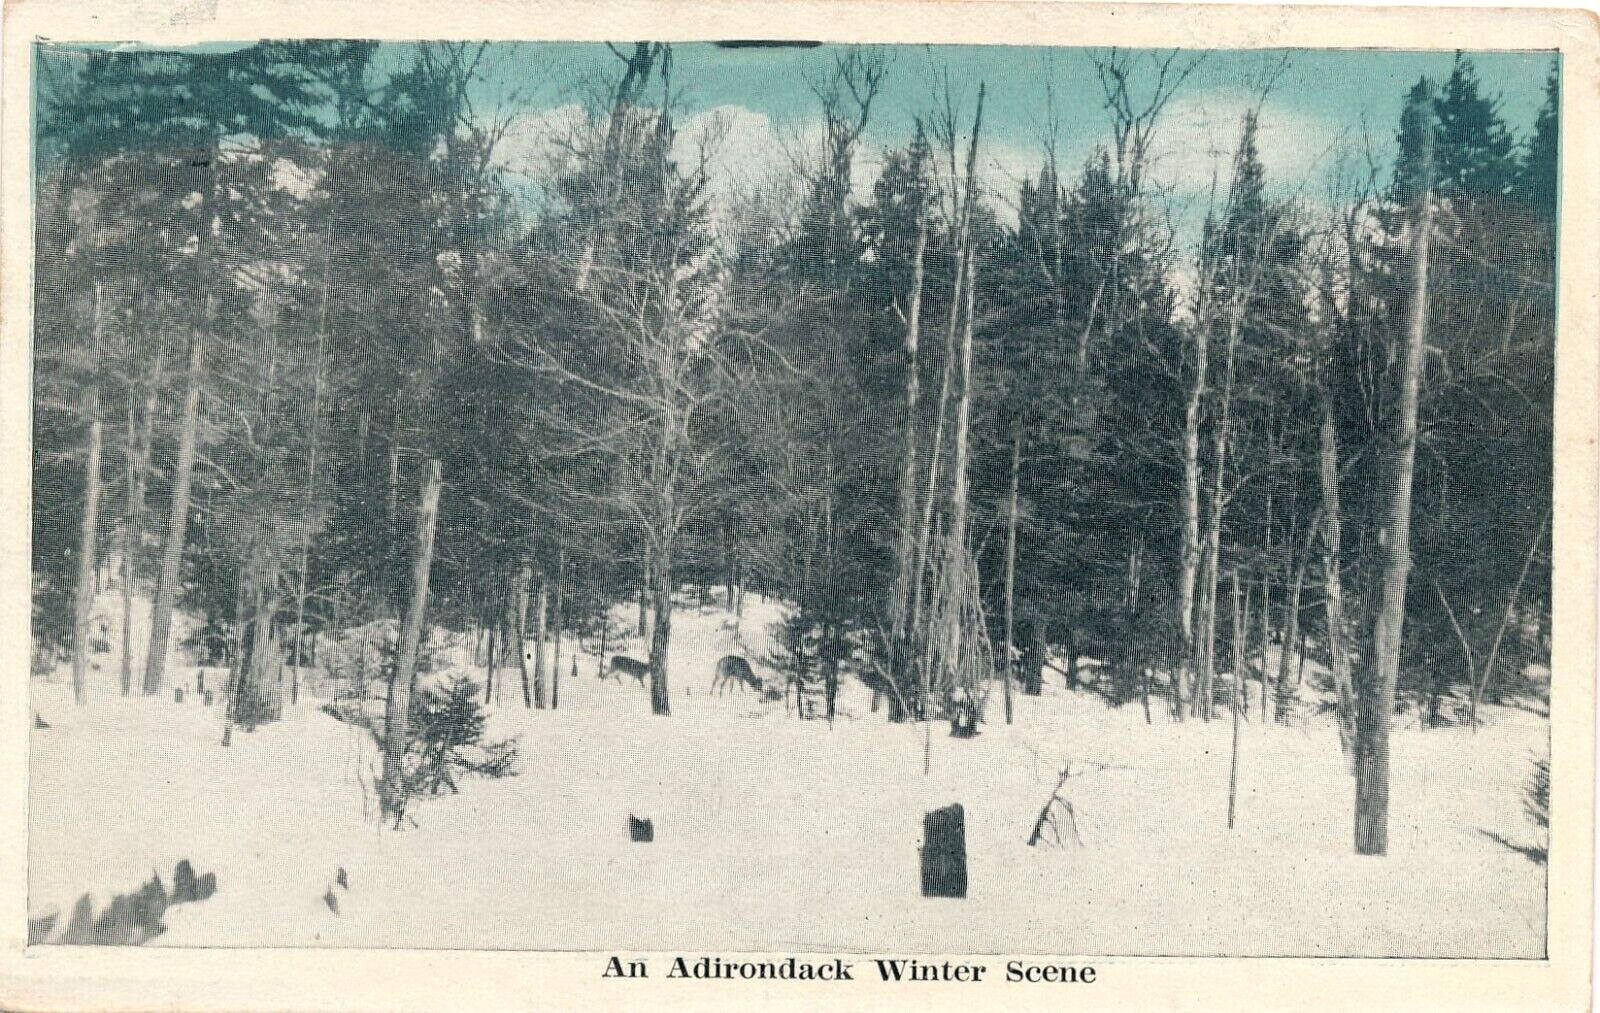 AN ADIRONDACK WINTER SCENE. NY. DEER. SNOW COVERED GROUND.